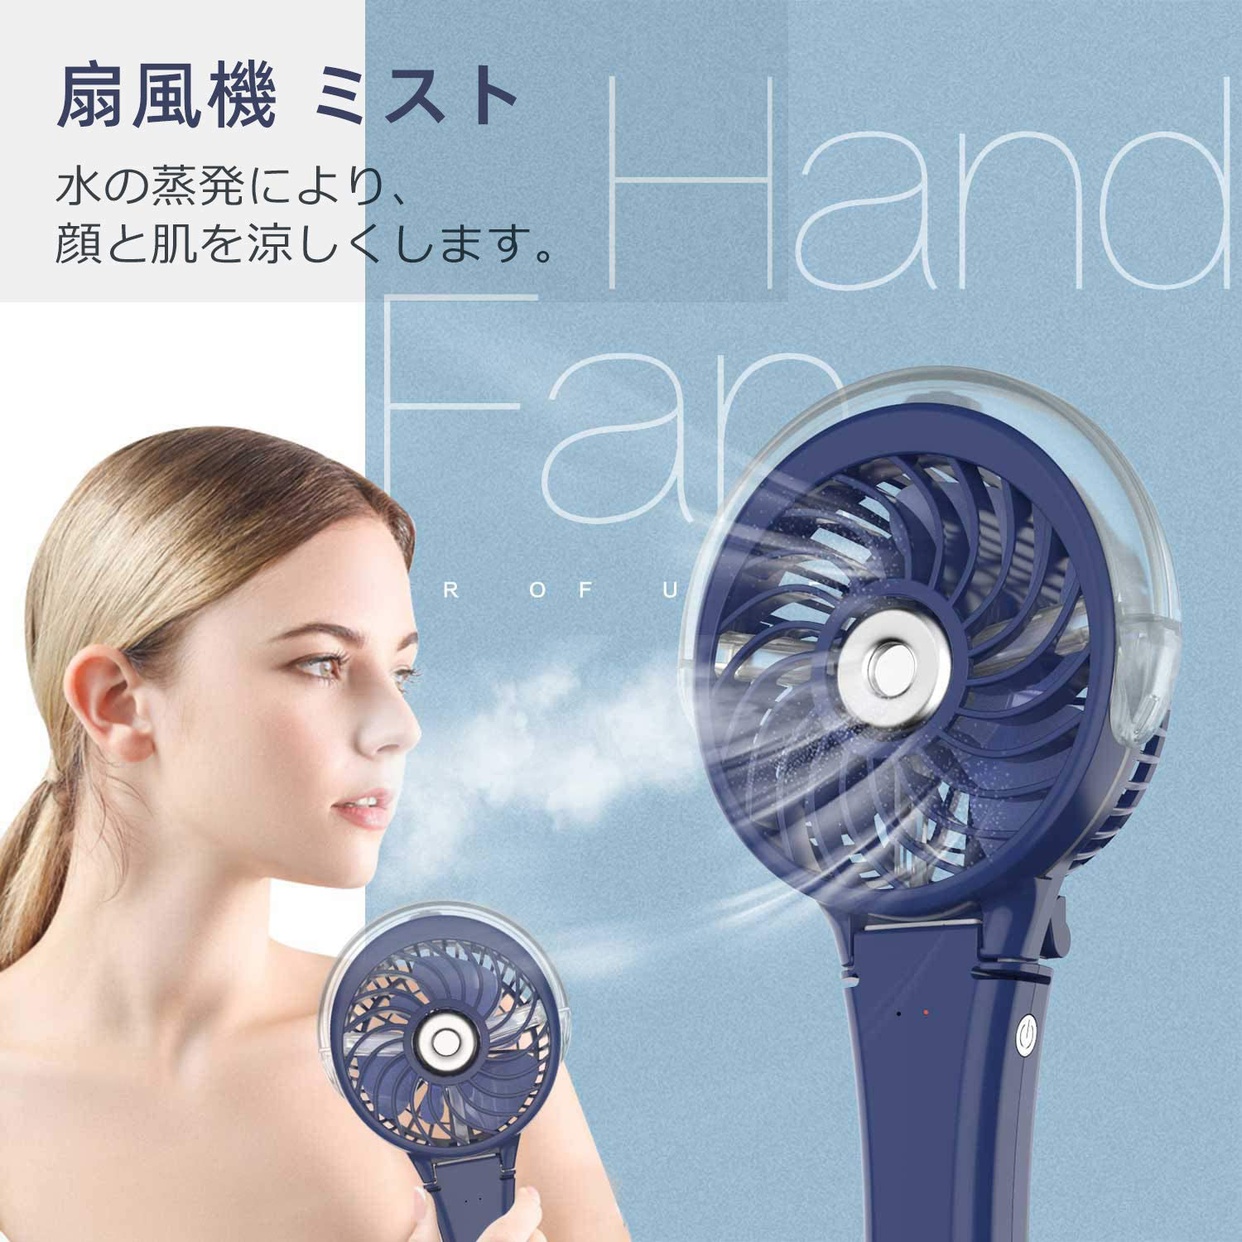 HandFan(ハンドファン) ミスト 手持ち扇風機の商品画像2 